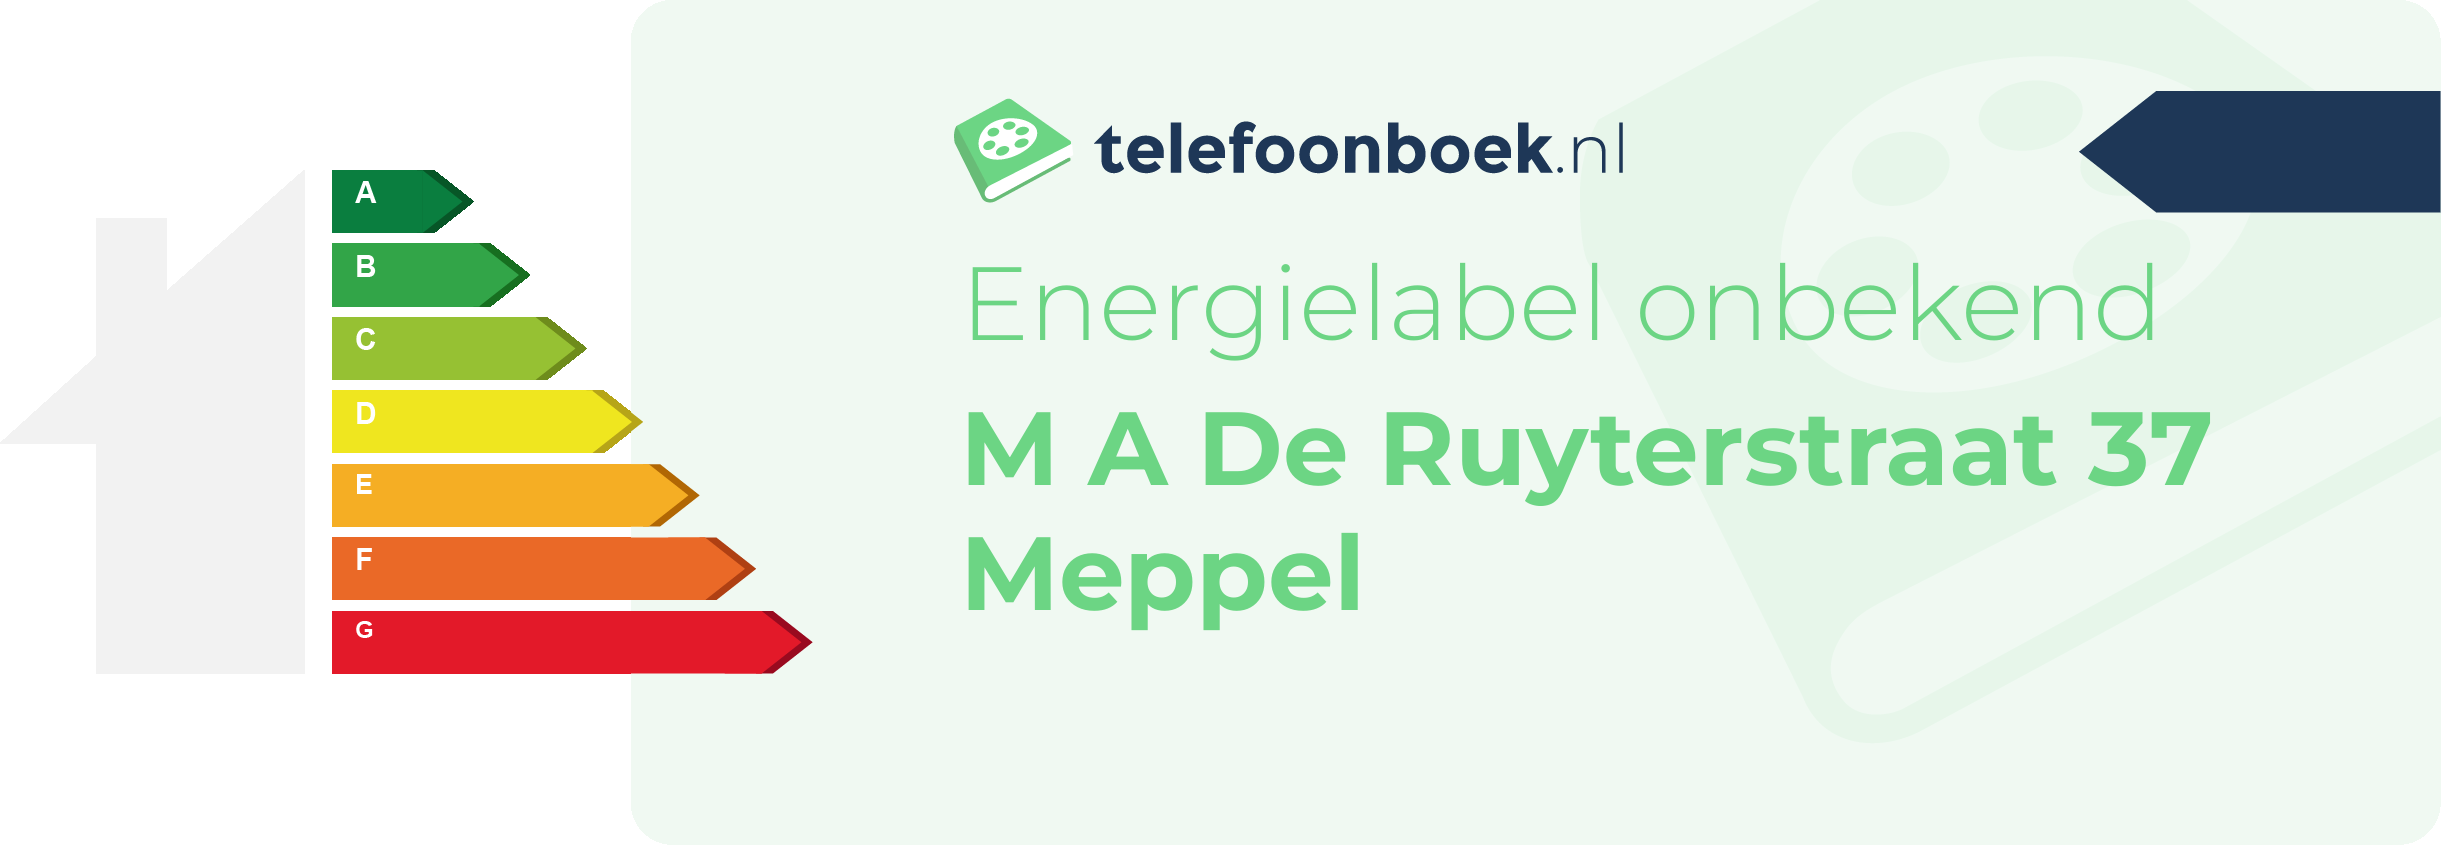 Energielabel M A De Ruyterstraat 37 Meppel